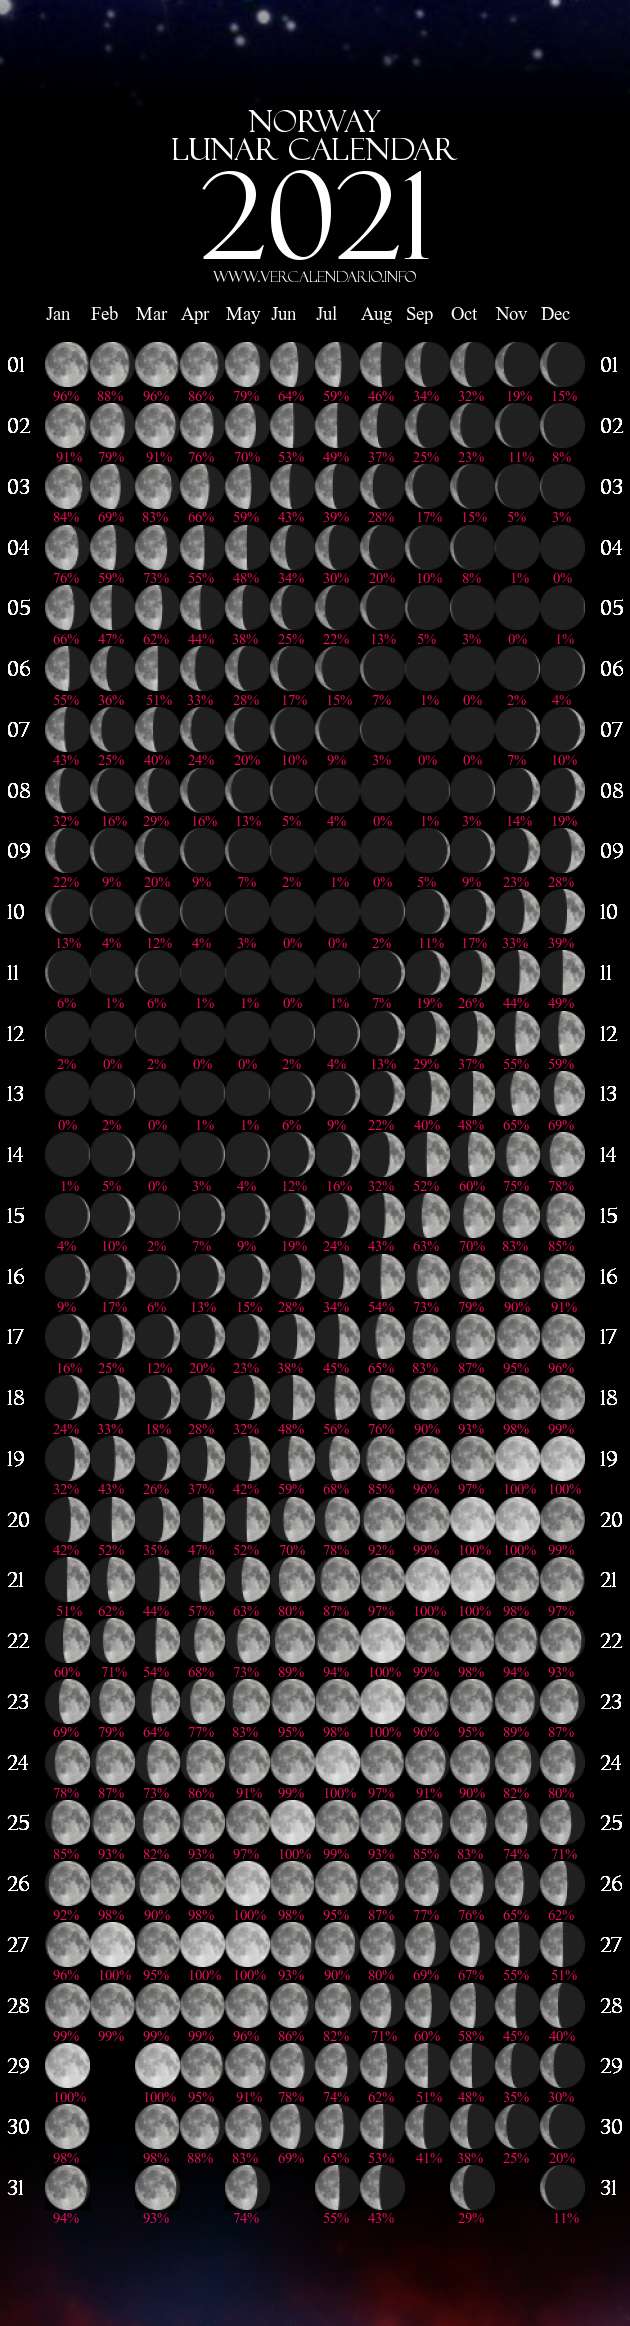 lunar-calendar-2021-norway